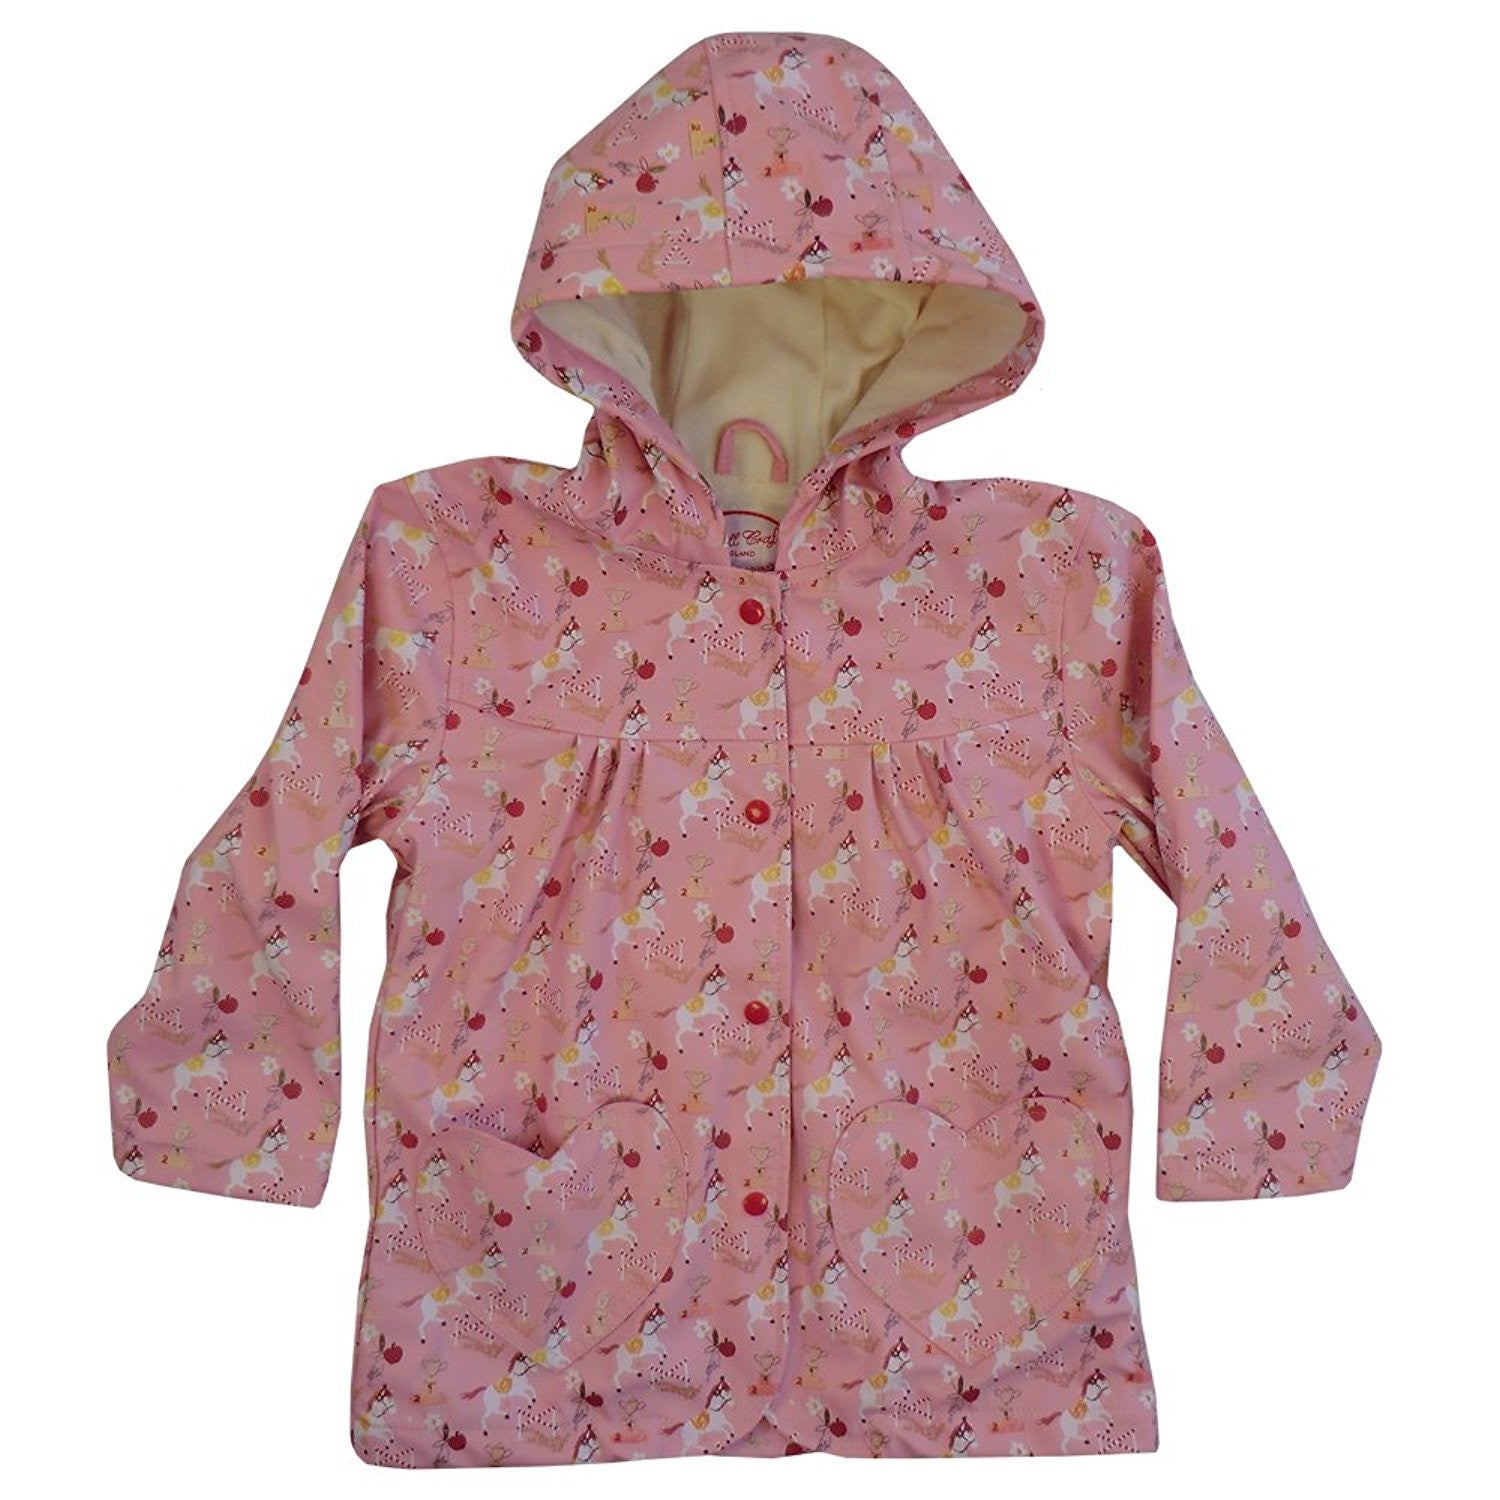 Powell Craft Girls Pony Print Raincoat.pink - hanrattycraftsgifts.co.uk